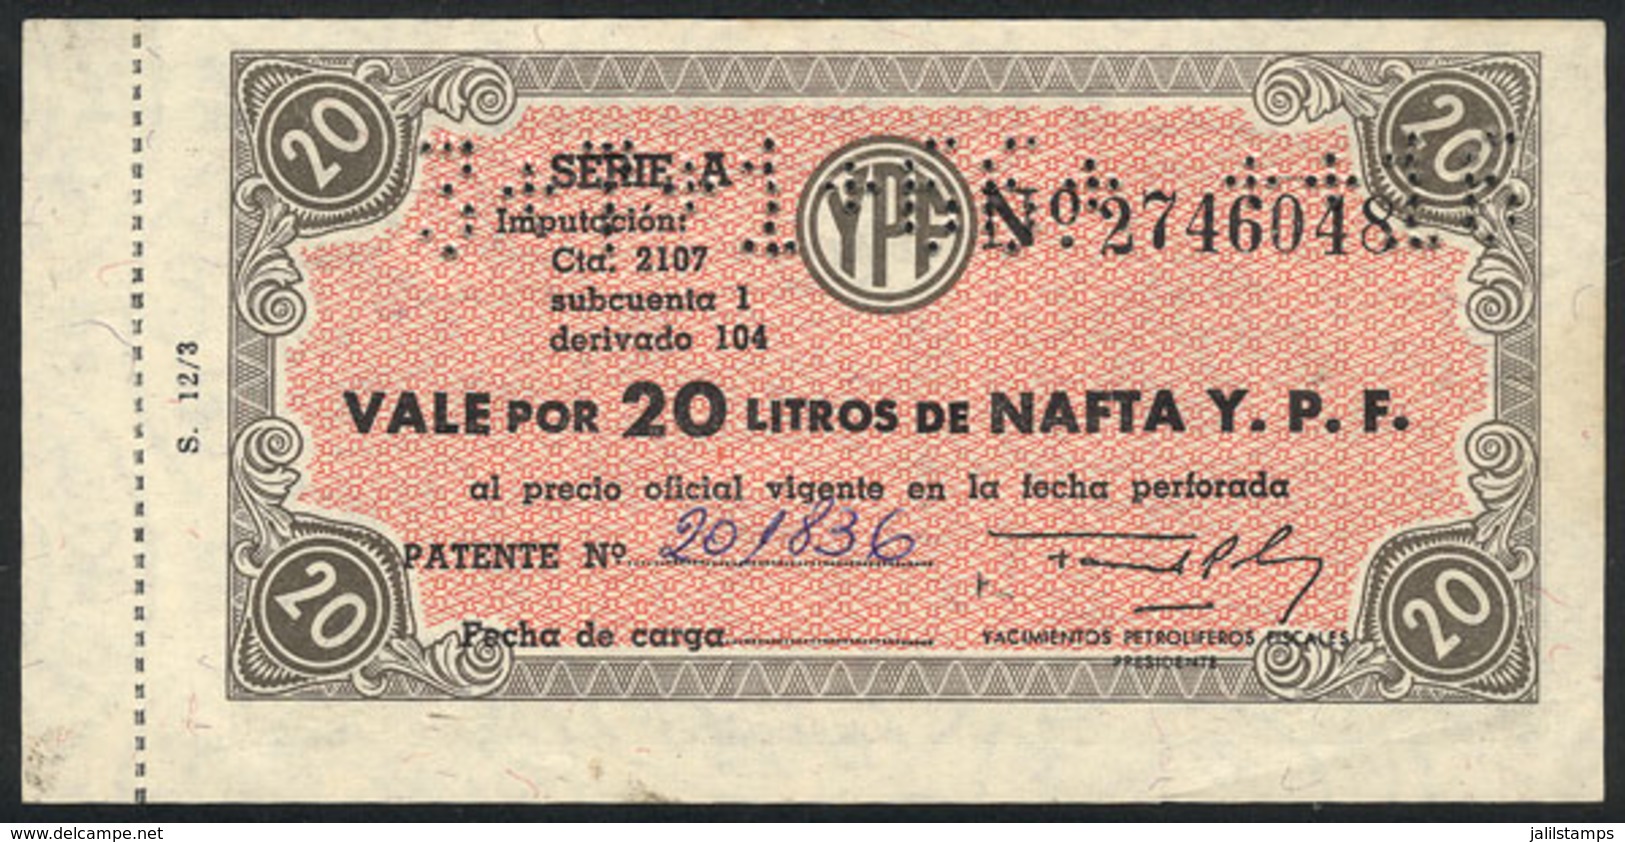 ARGENTINA: "Rare ""Vale Por 20 Litros De Nafta Y.P.F."" (Voucher For 20 Liters Of Y.P.F. Gas ), Circa 1966, VF Quality!" - Manuscripts